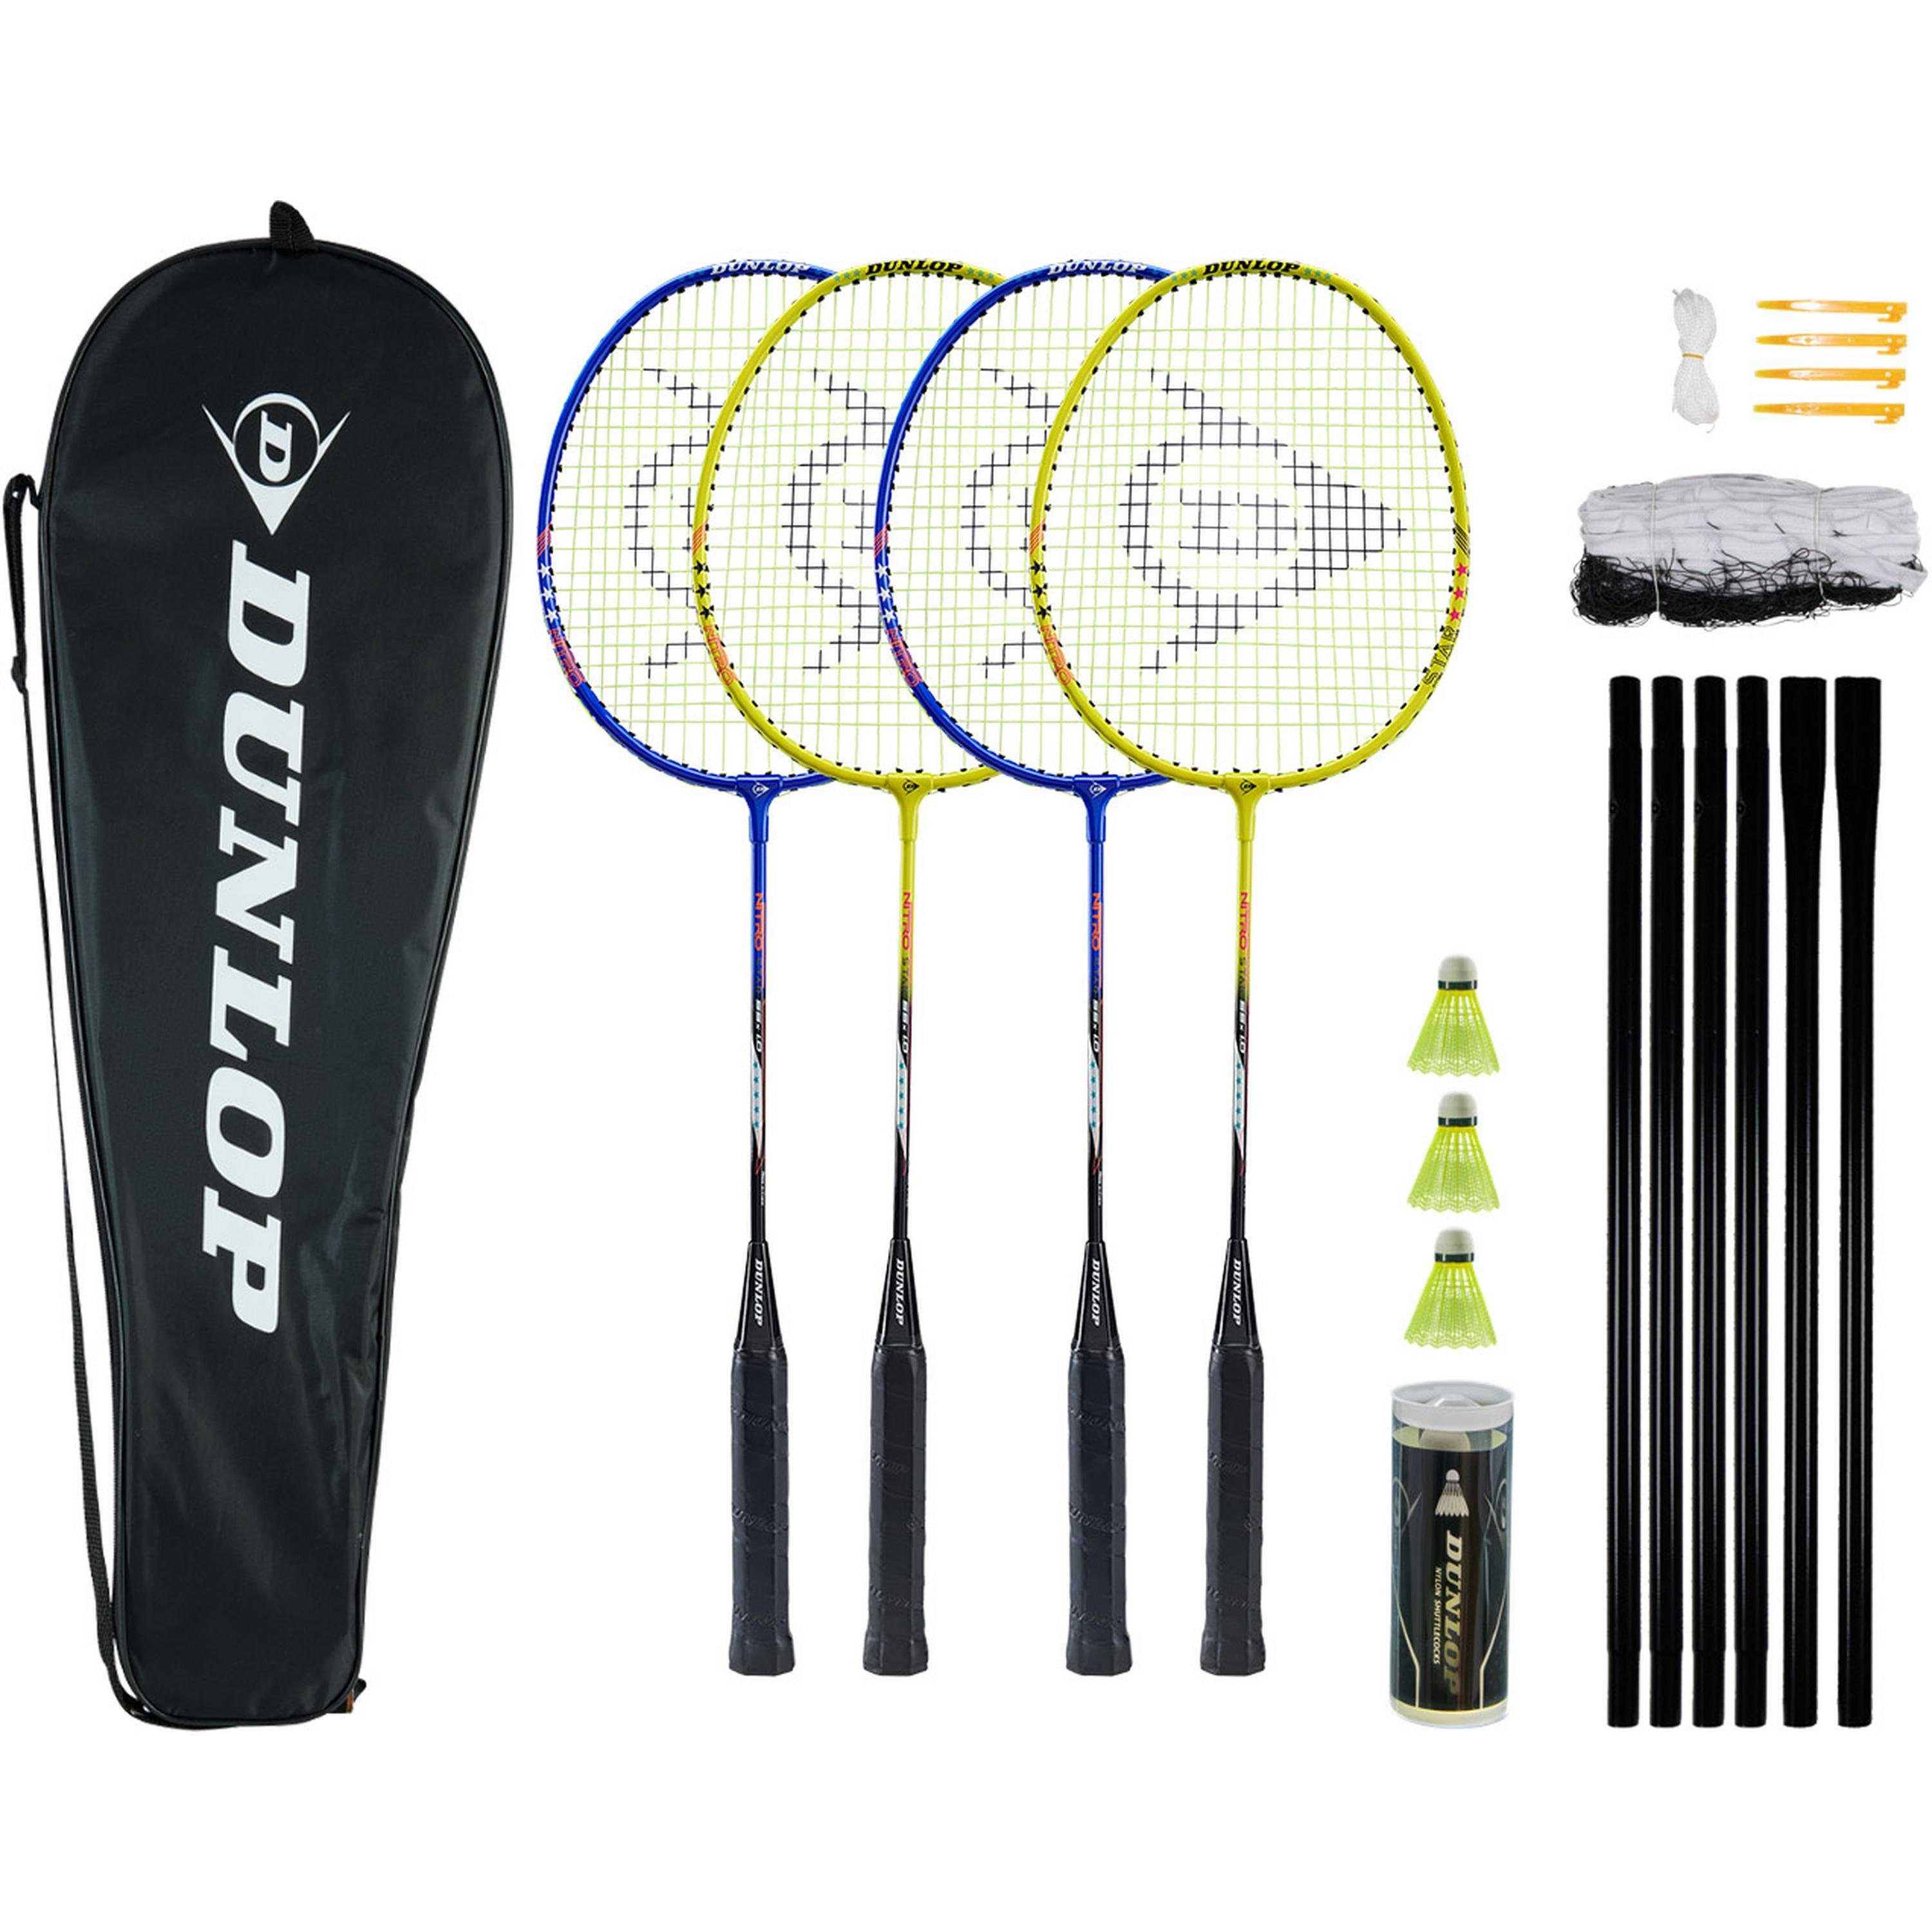 Dunlop Badmintonschläger NITRO-STAR SSx 1.0 4P SET BLUE/YELLOW/RED/BLACK